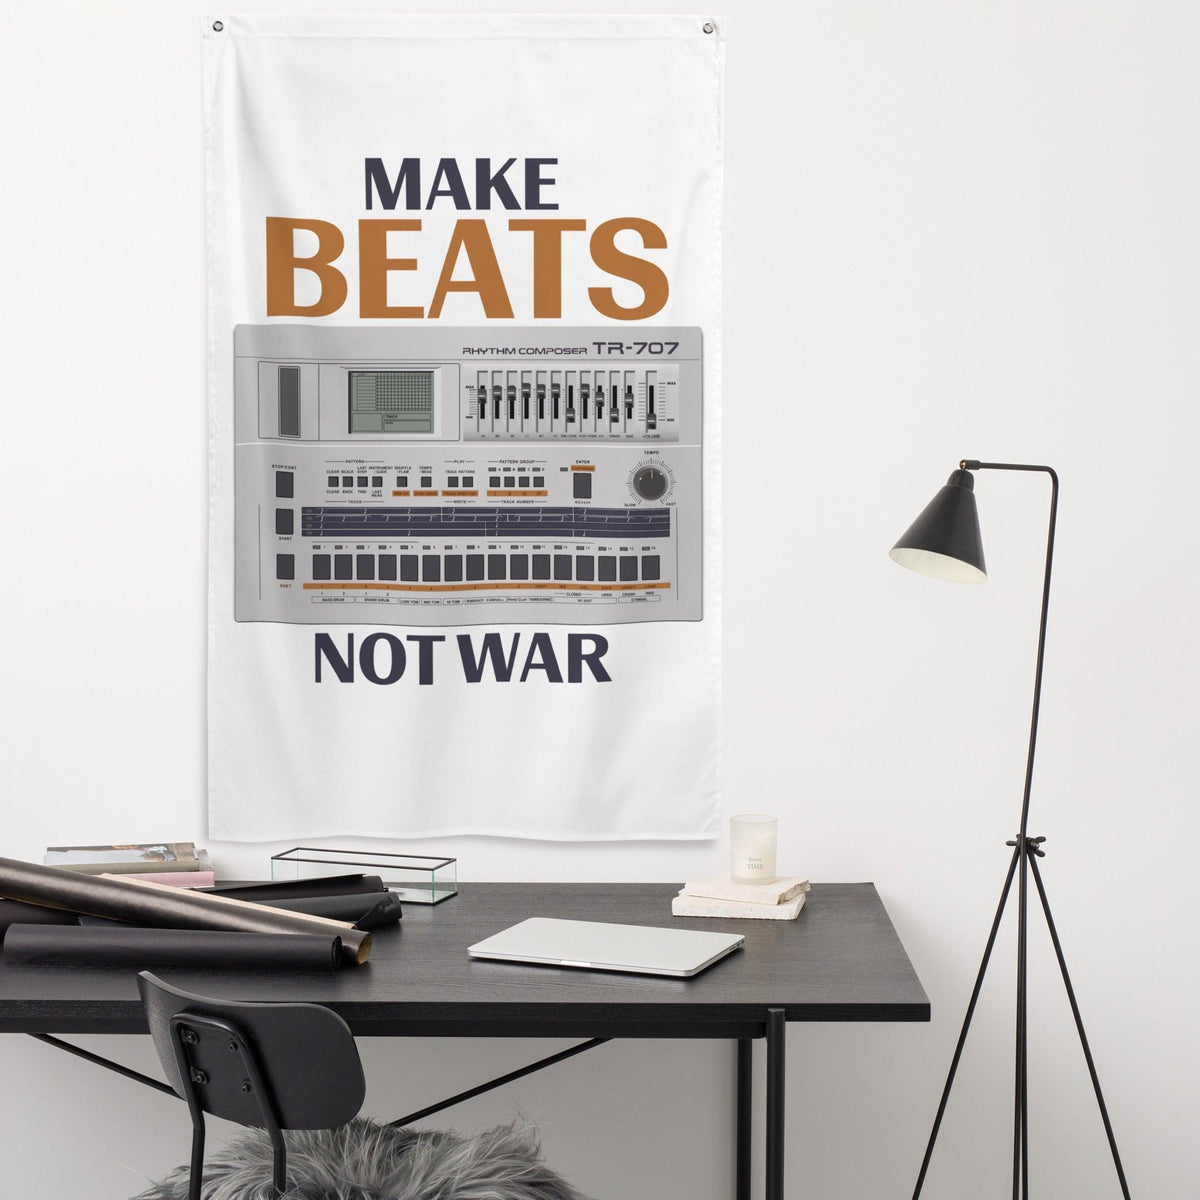 Roland TR-707 Rhythm Composer Artist Rendition | Drum Machine | Make Beats Not War Flag (Vertical) - Tedeschi Studio, LLC.